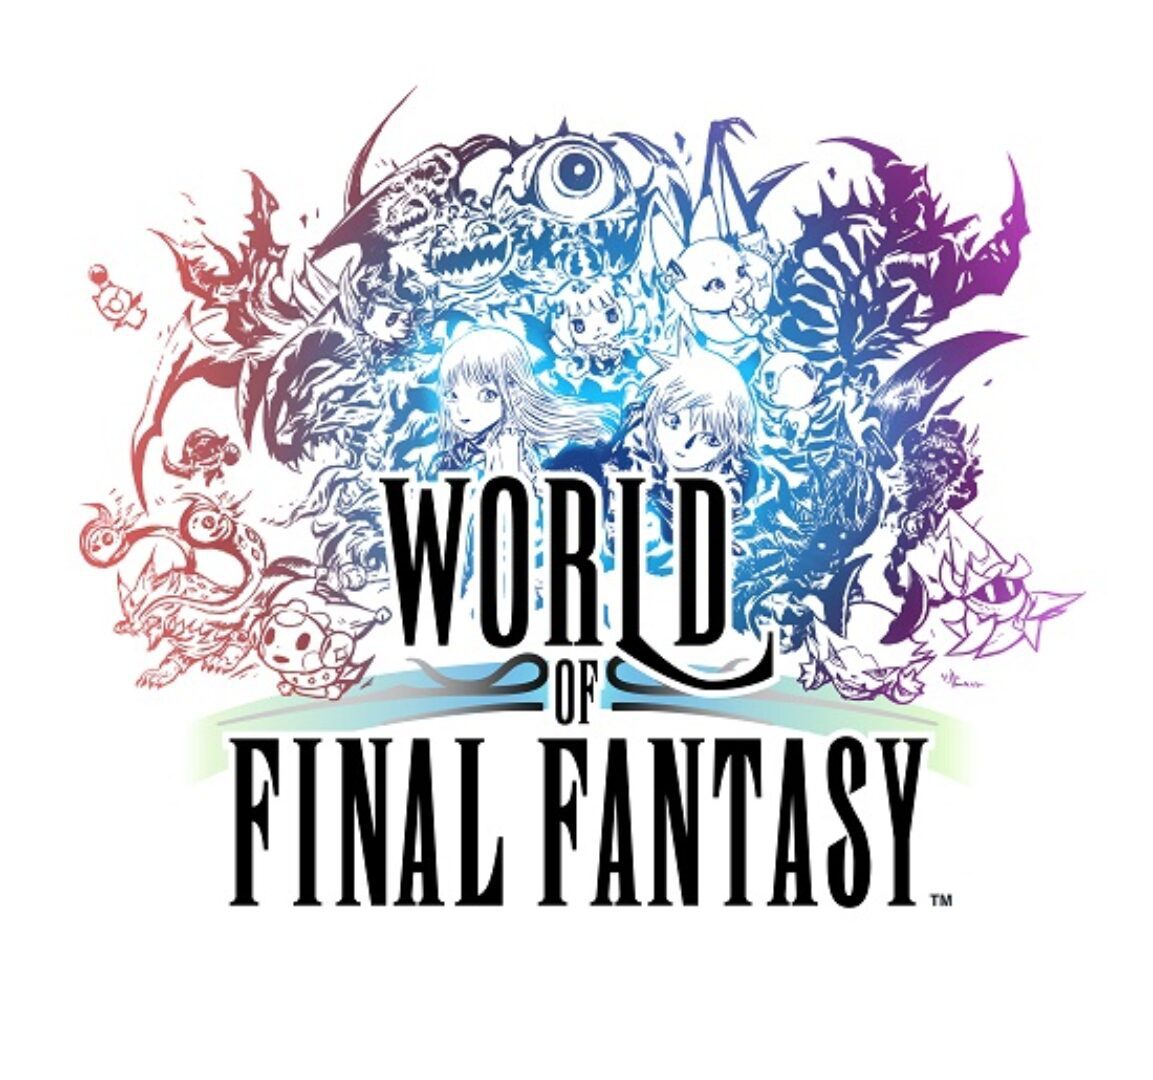 World of Final Fantasy Welcomes Sora from Kingdom Hearts